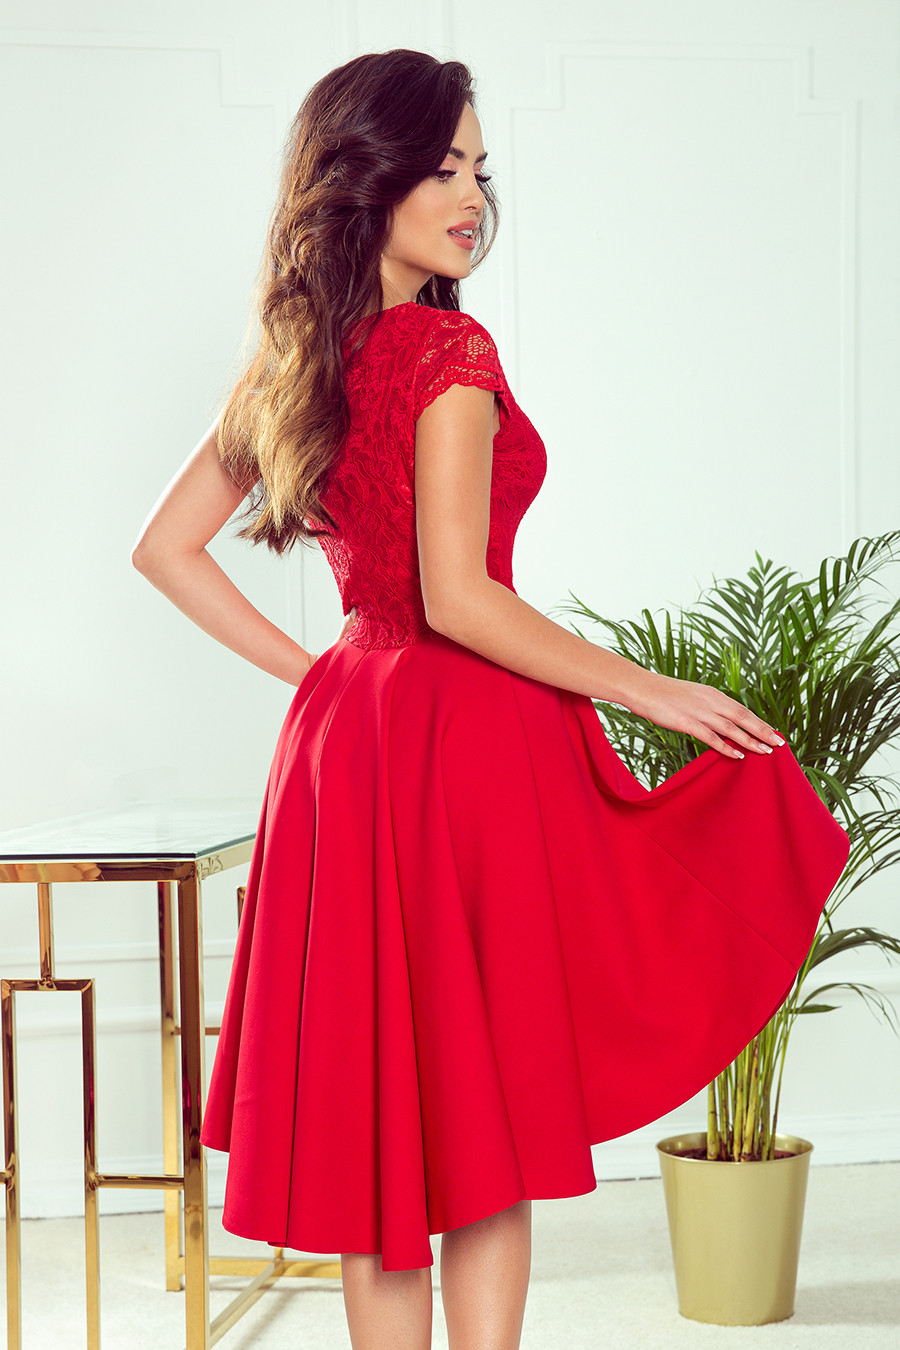 Dámské šaty Červená XXXL model 8377965 - numoco